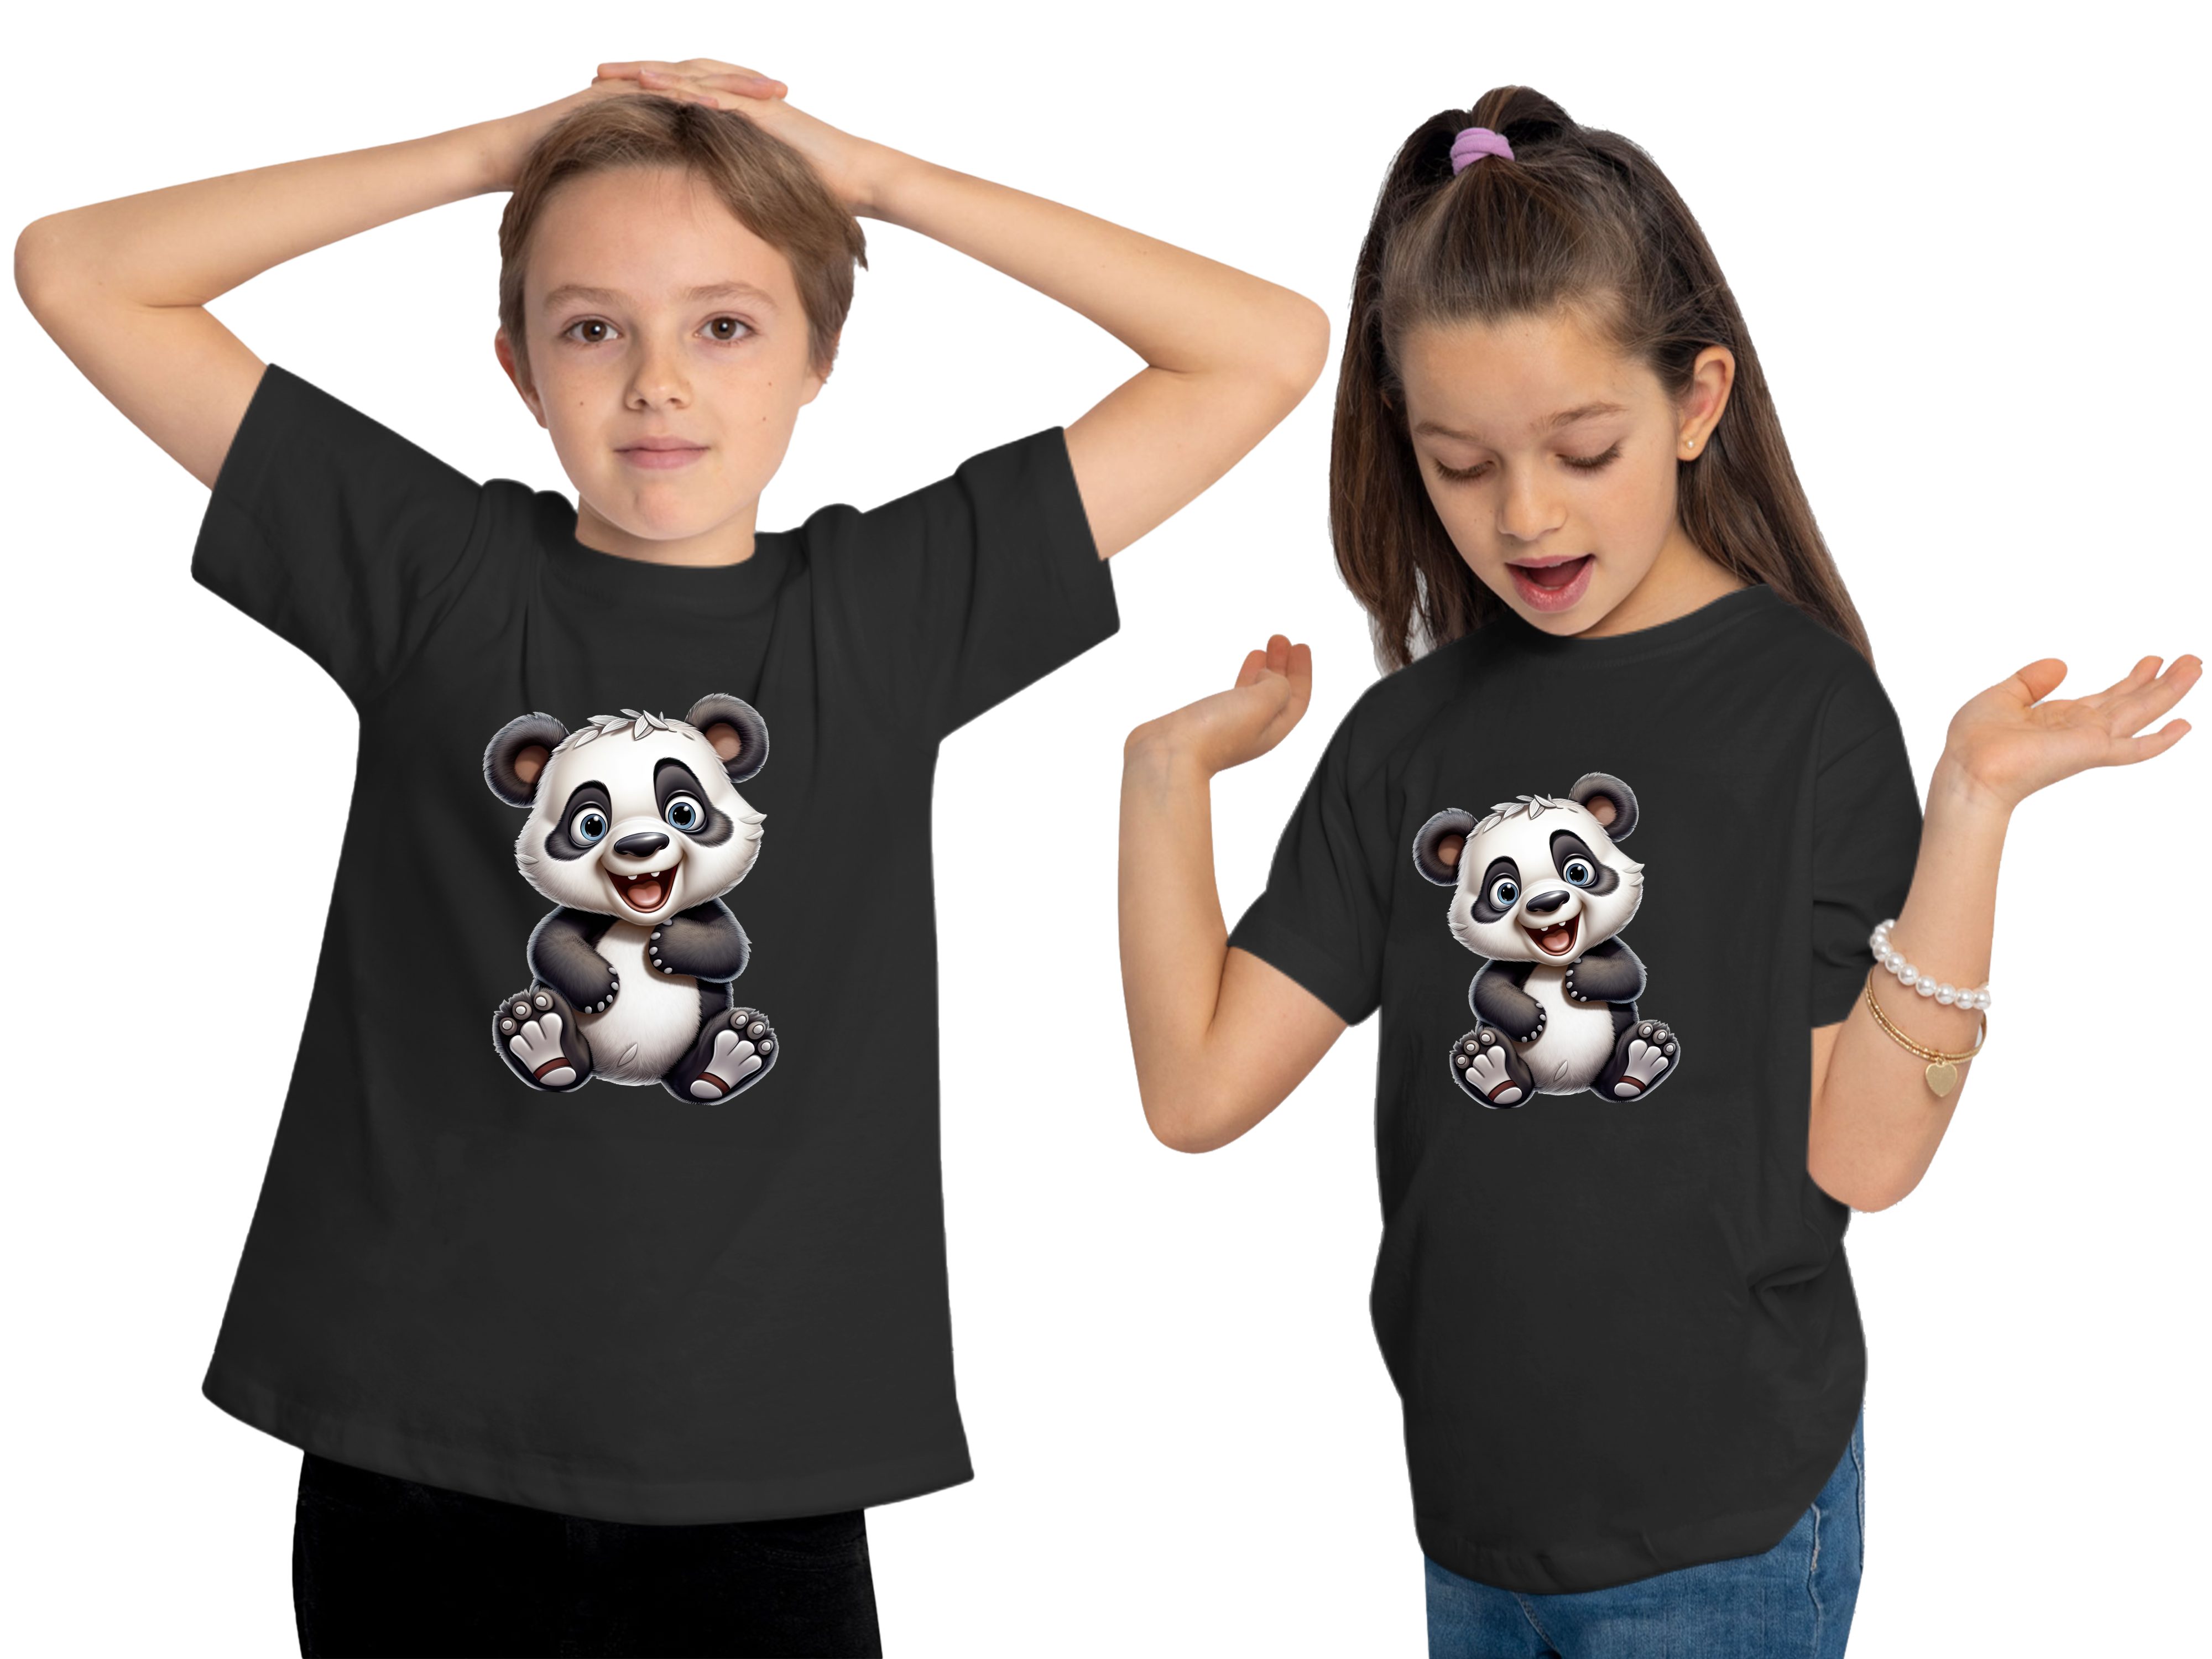 MyDesign24 T-Shirt Kinder Wildtier Print bedruckt Bär mit Baumwollshirt Shirt Panda i277 - Aufdruck, Baby schwarz